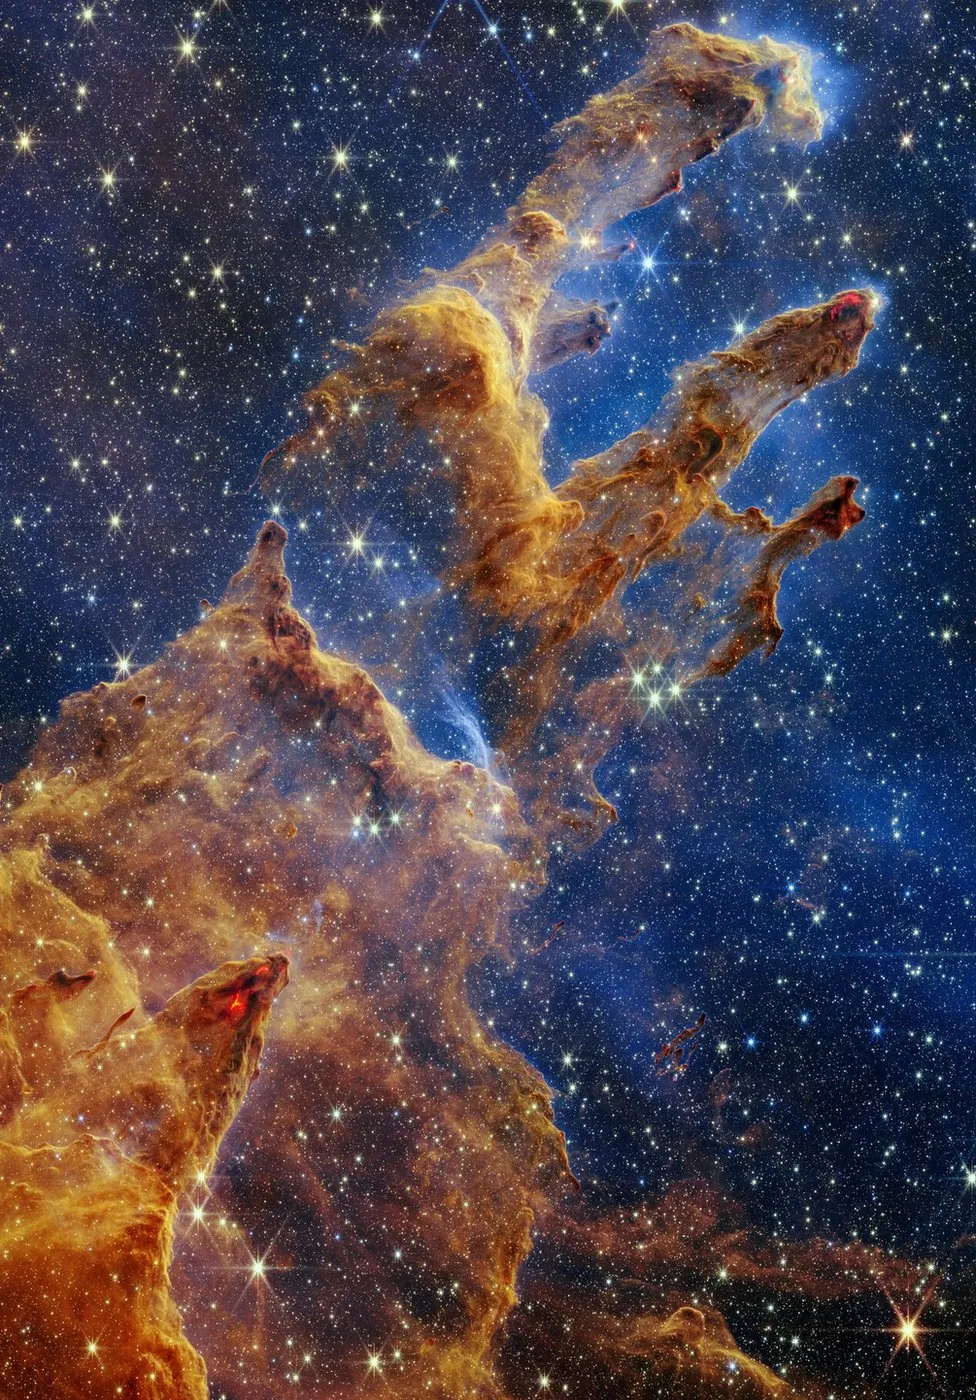 James Webb Telescope _127263120_weic2216b.jpg